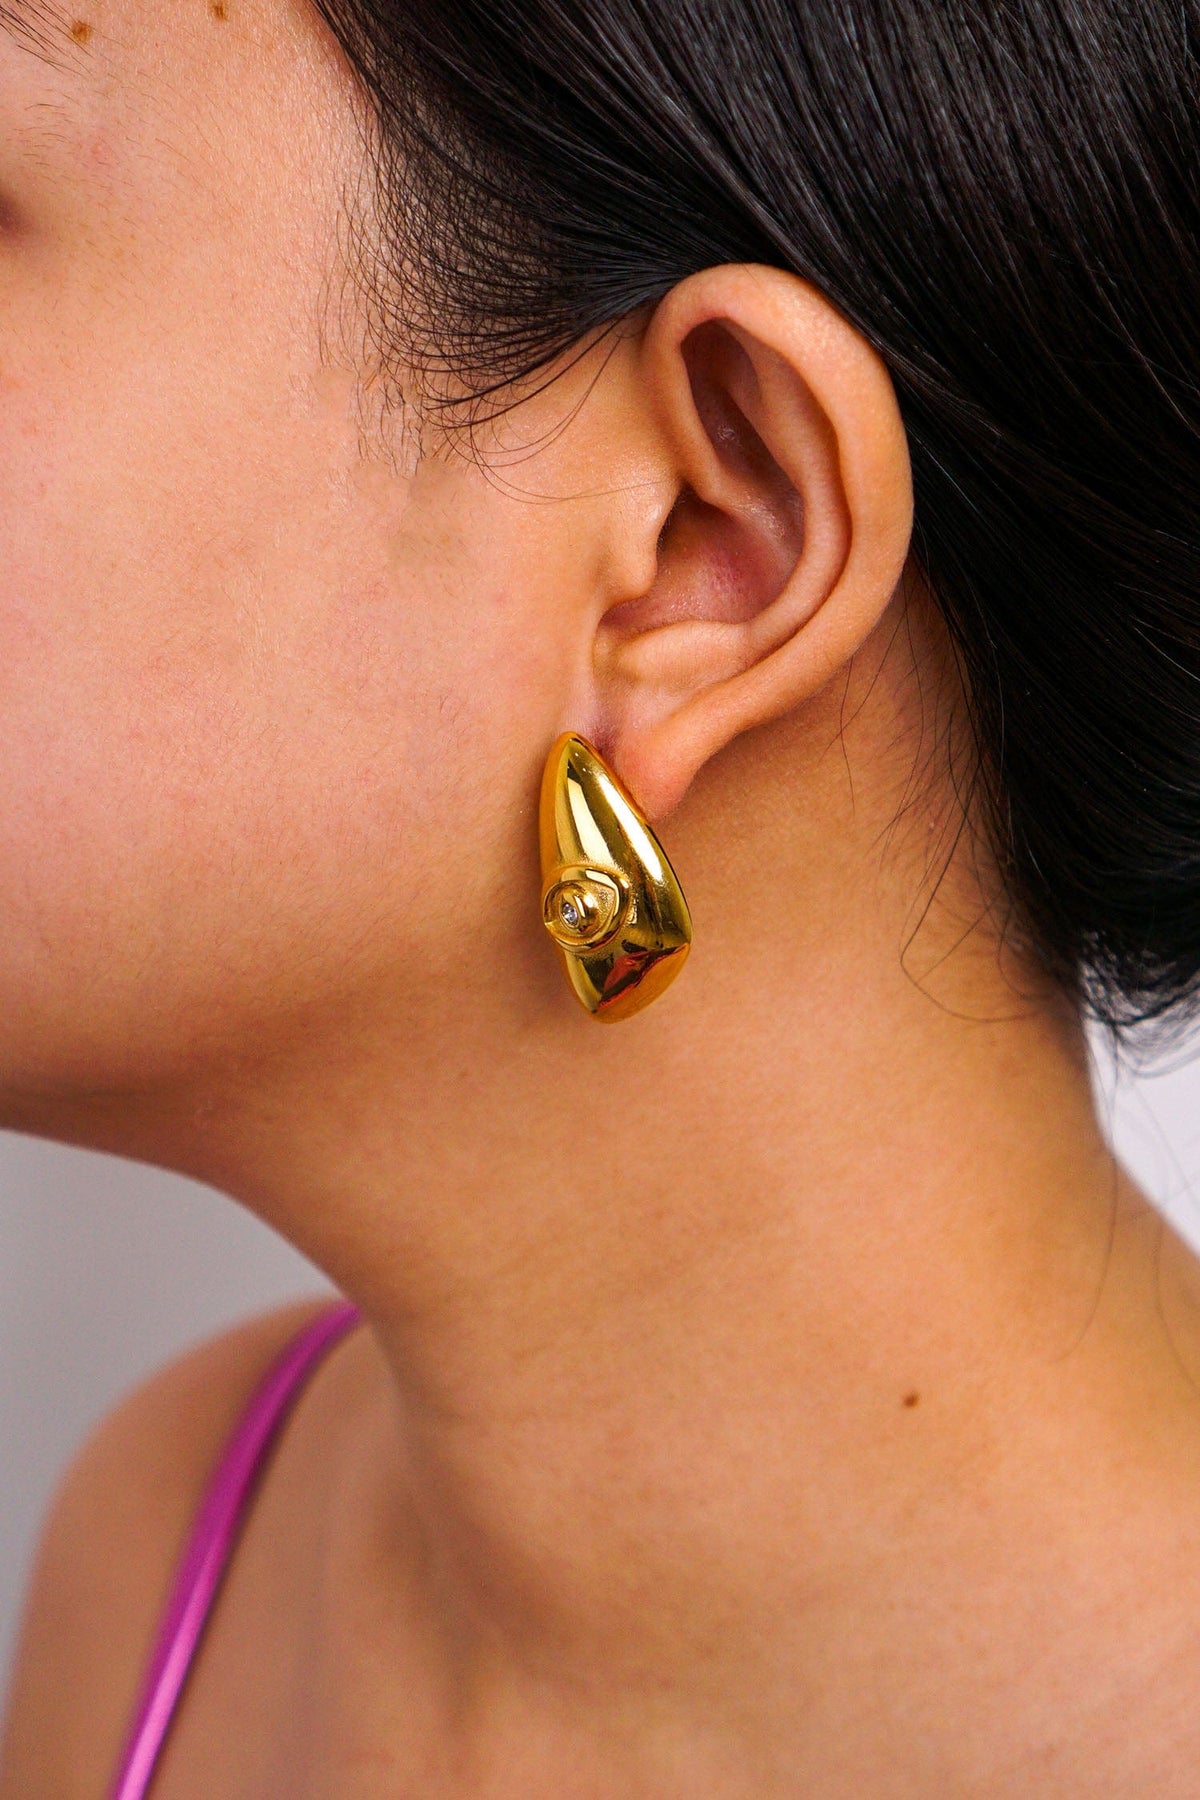 DCD EARRINGS Gold Smooth Diamond Eye Stud Earrings